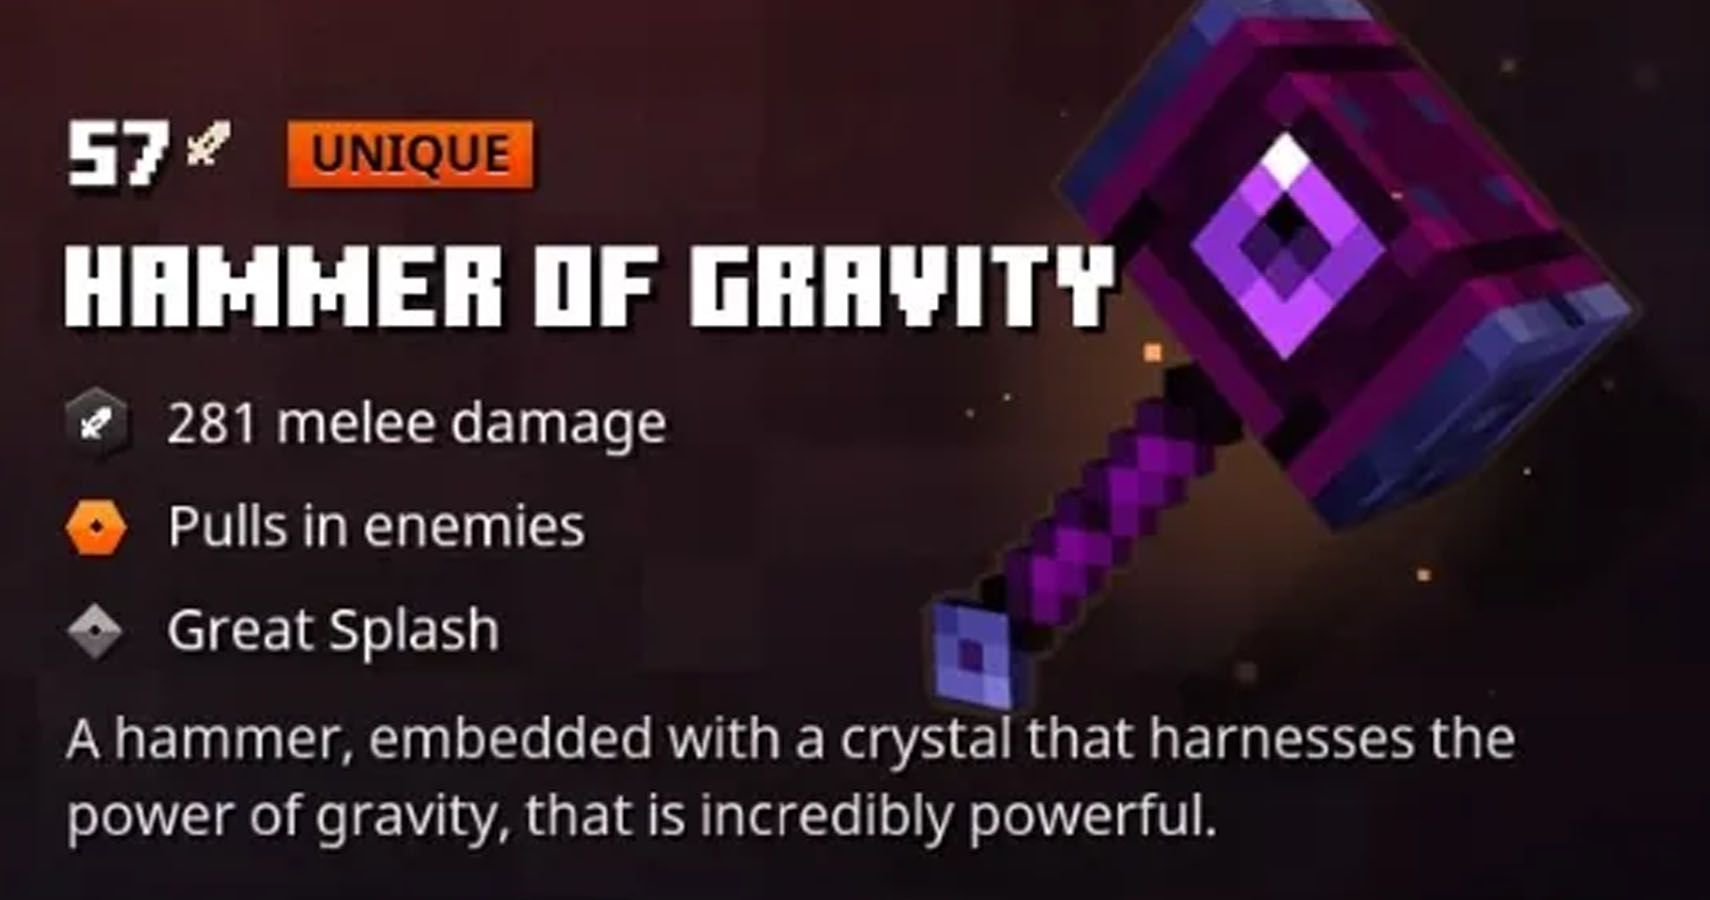 Hammer of gravity stats